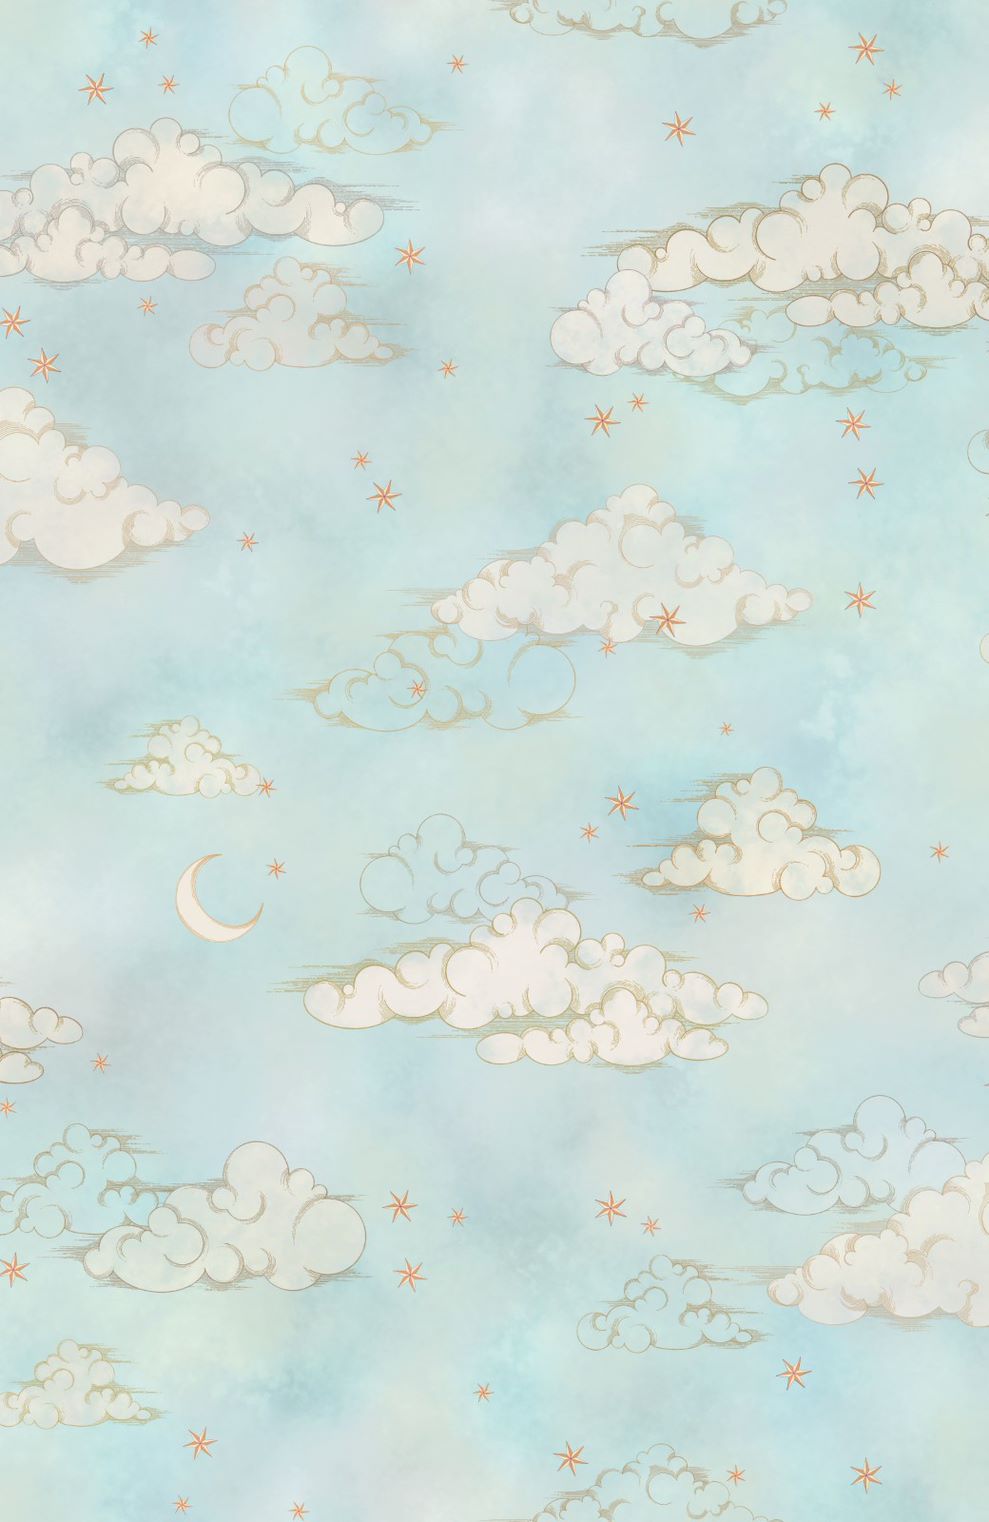 starry-blue-night-sky-stars-clouds-moon-wallpaper-green